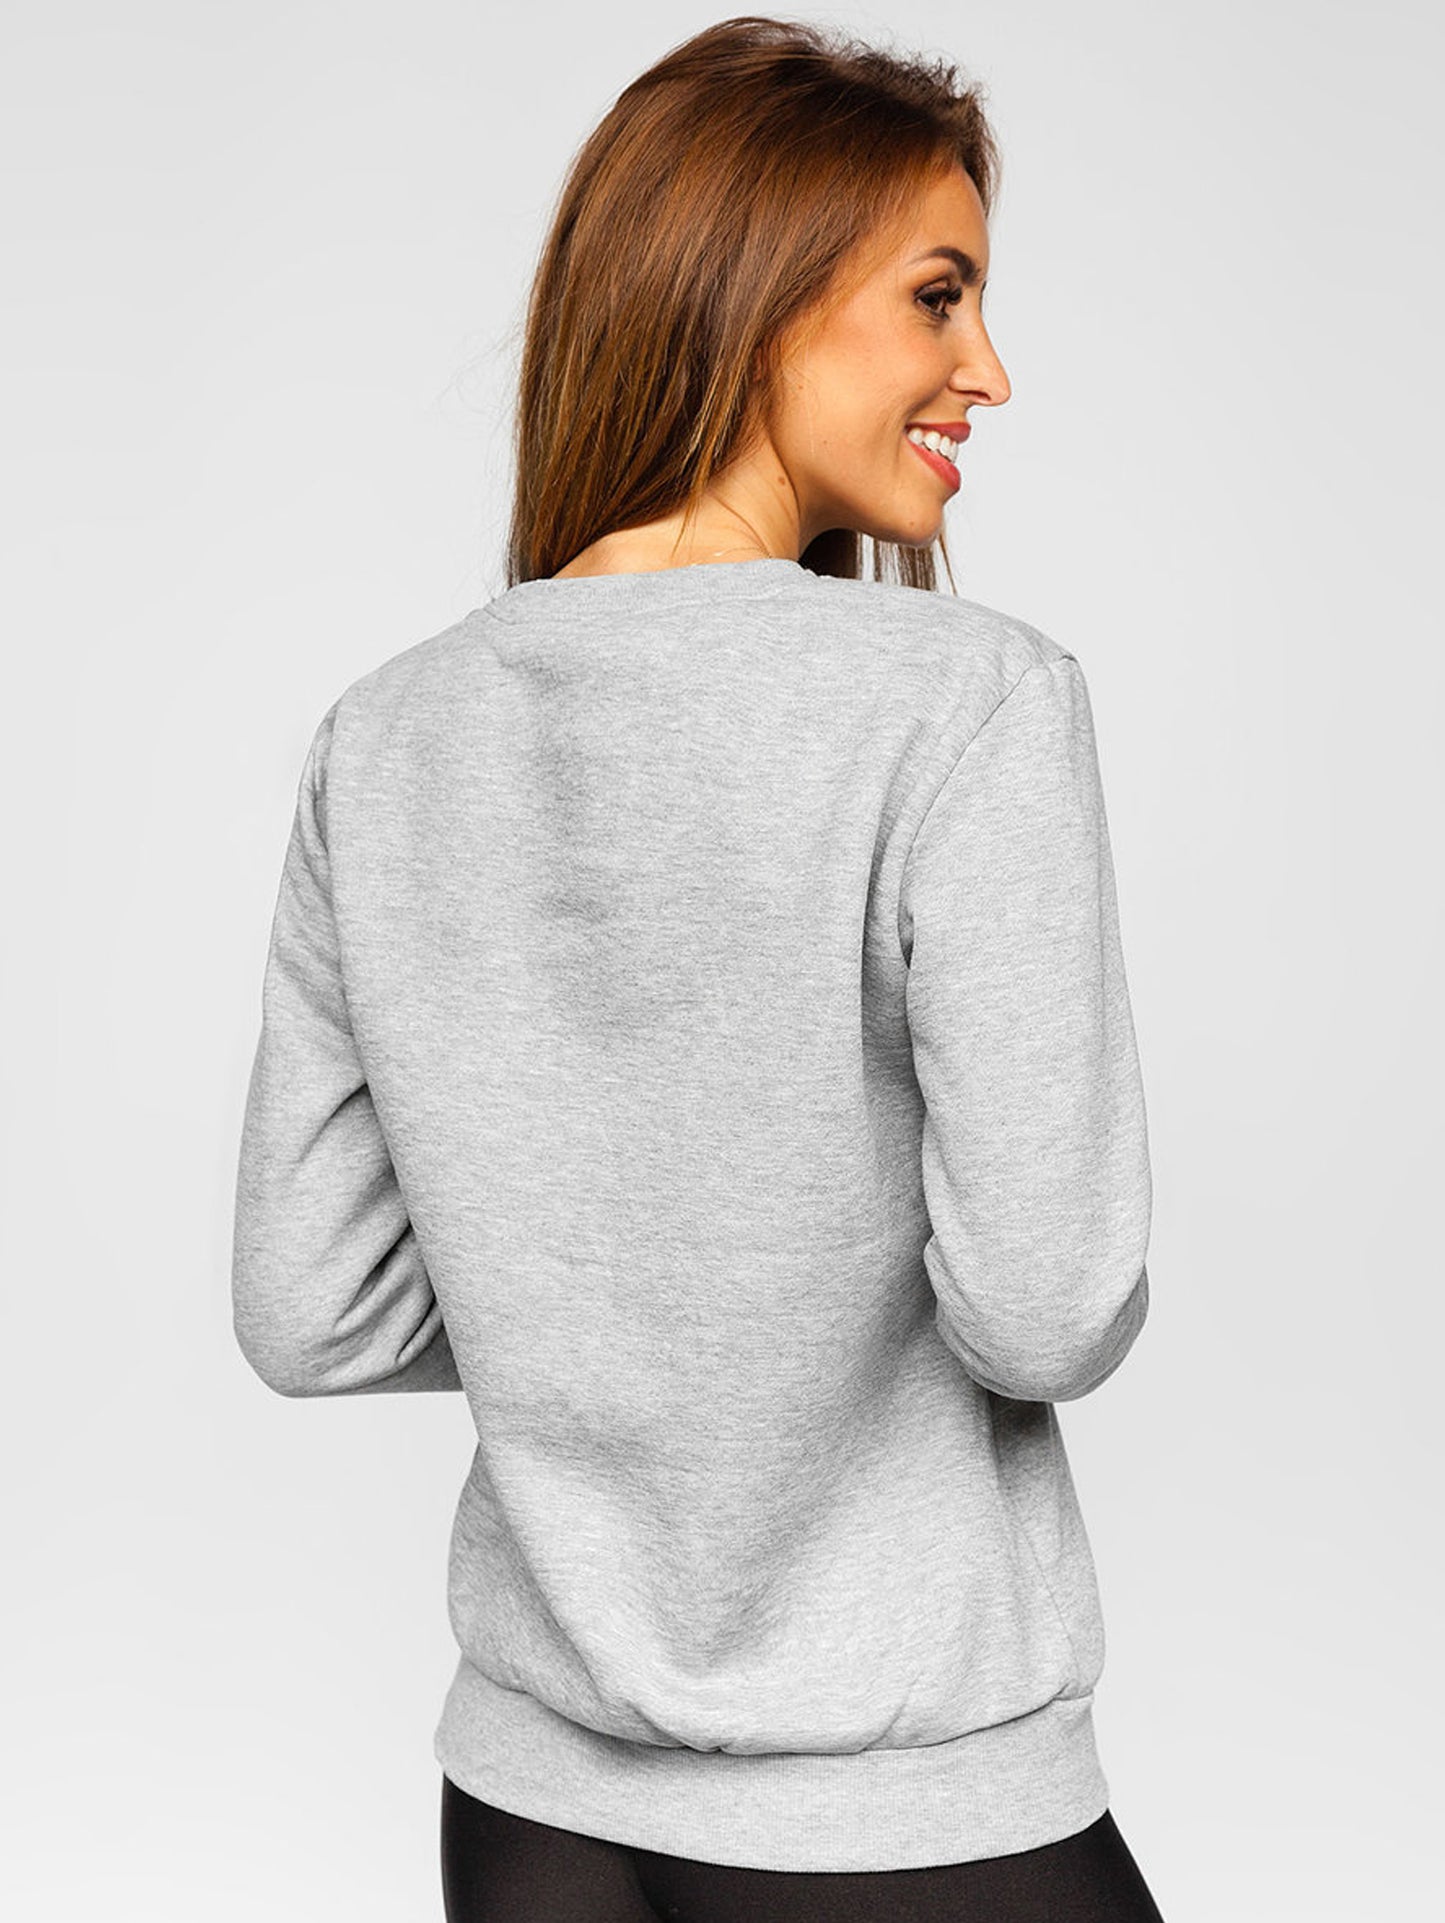 Women's Basic Heather Gray Sweatshirt